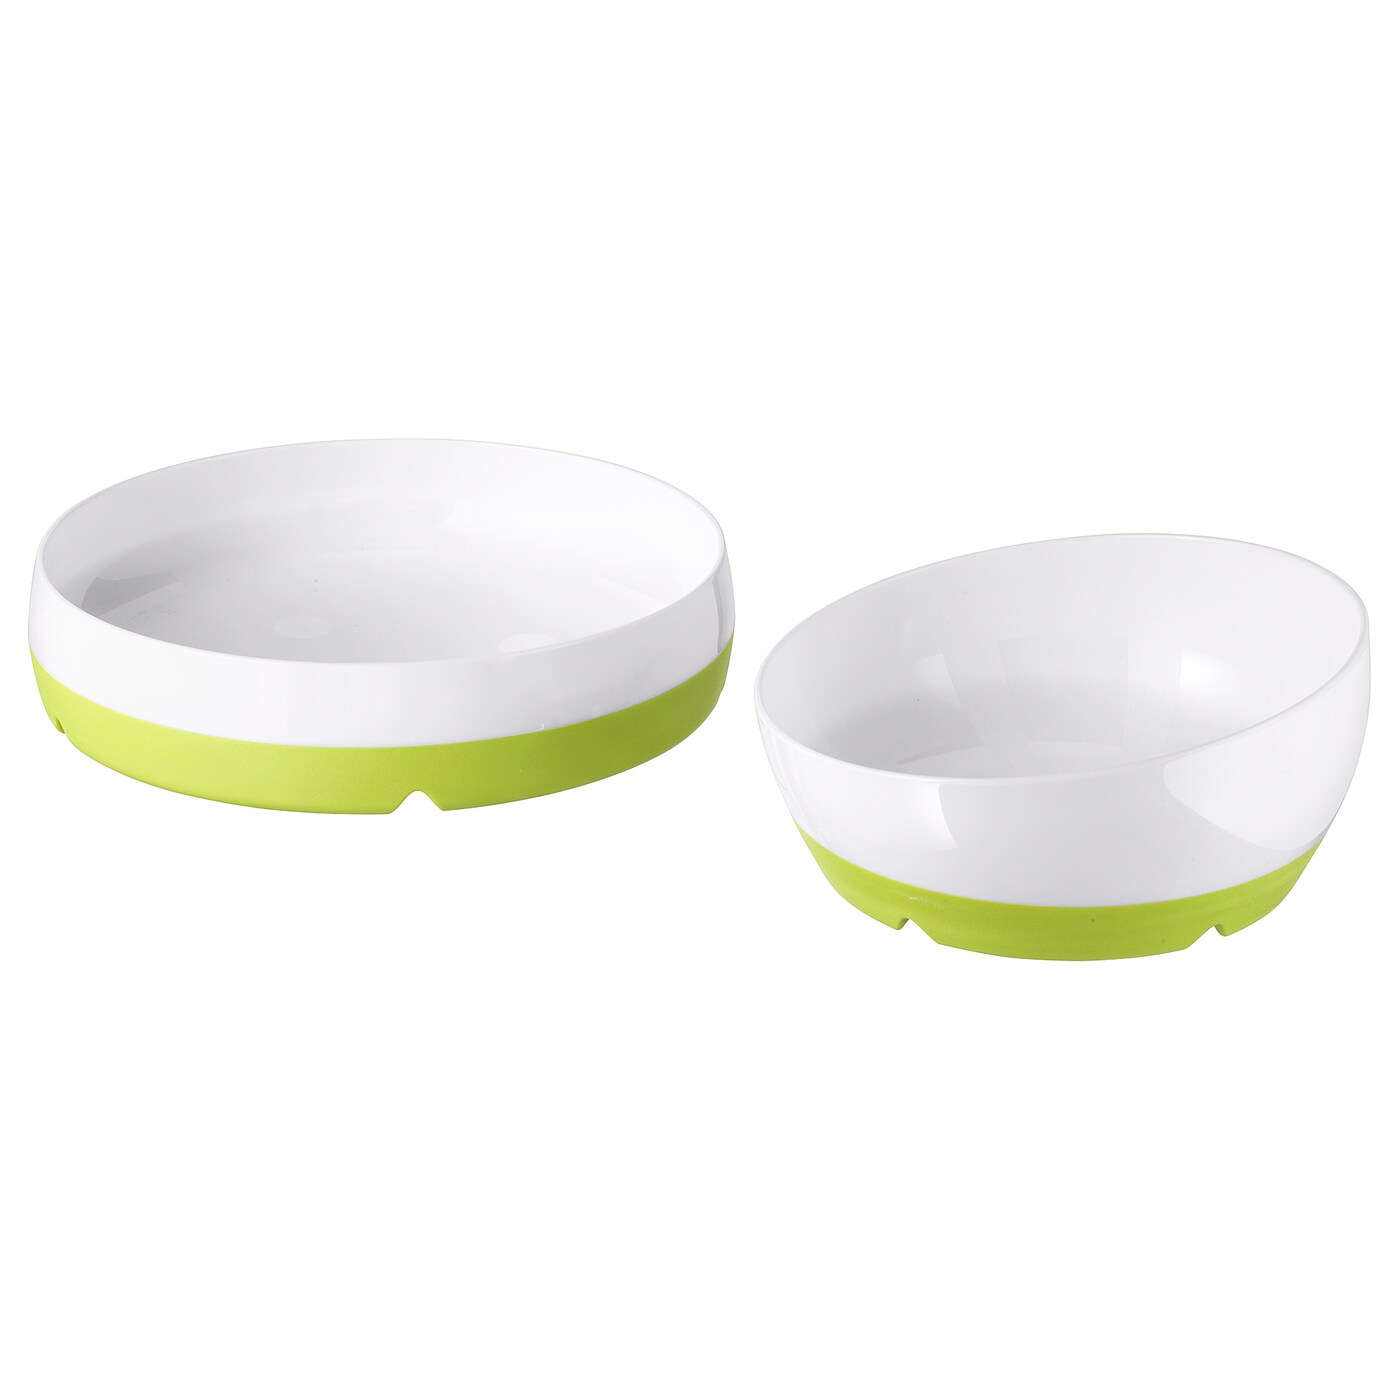 Набор детских тарелок, 2 шт. - IKEA SMÅGLI/SMAGLI, белый/зеленый, СМЭГЛИ ИКЕА